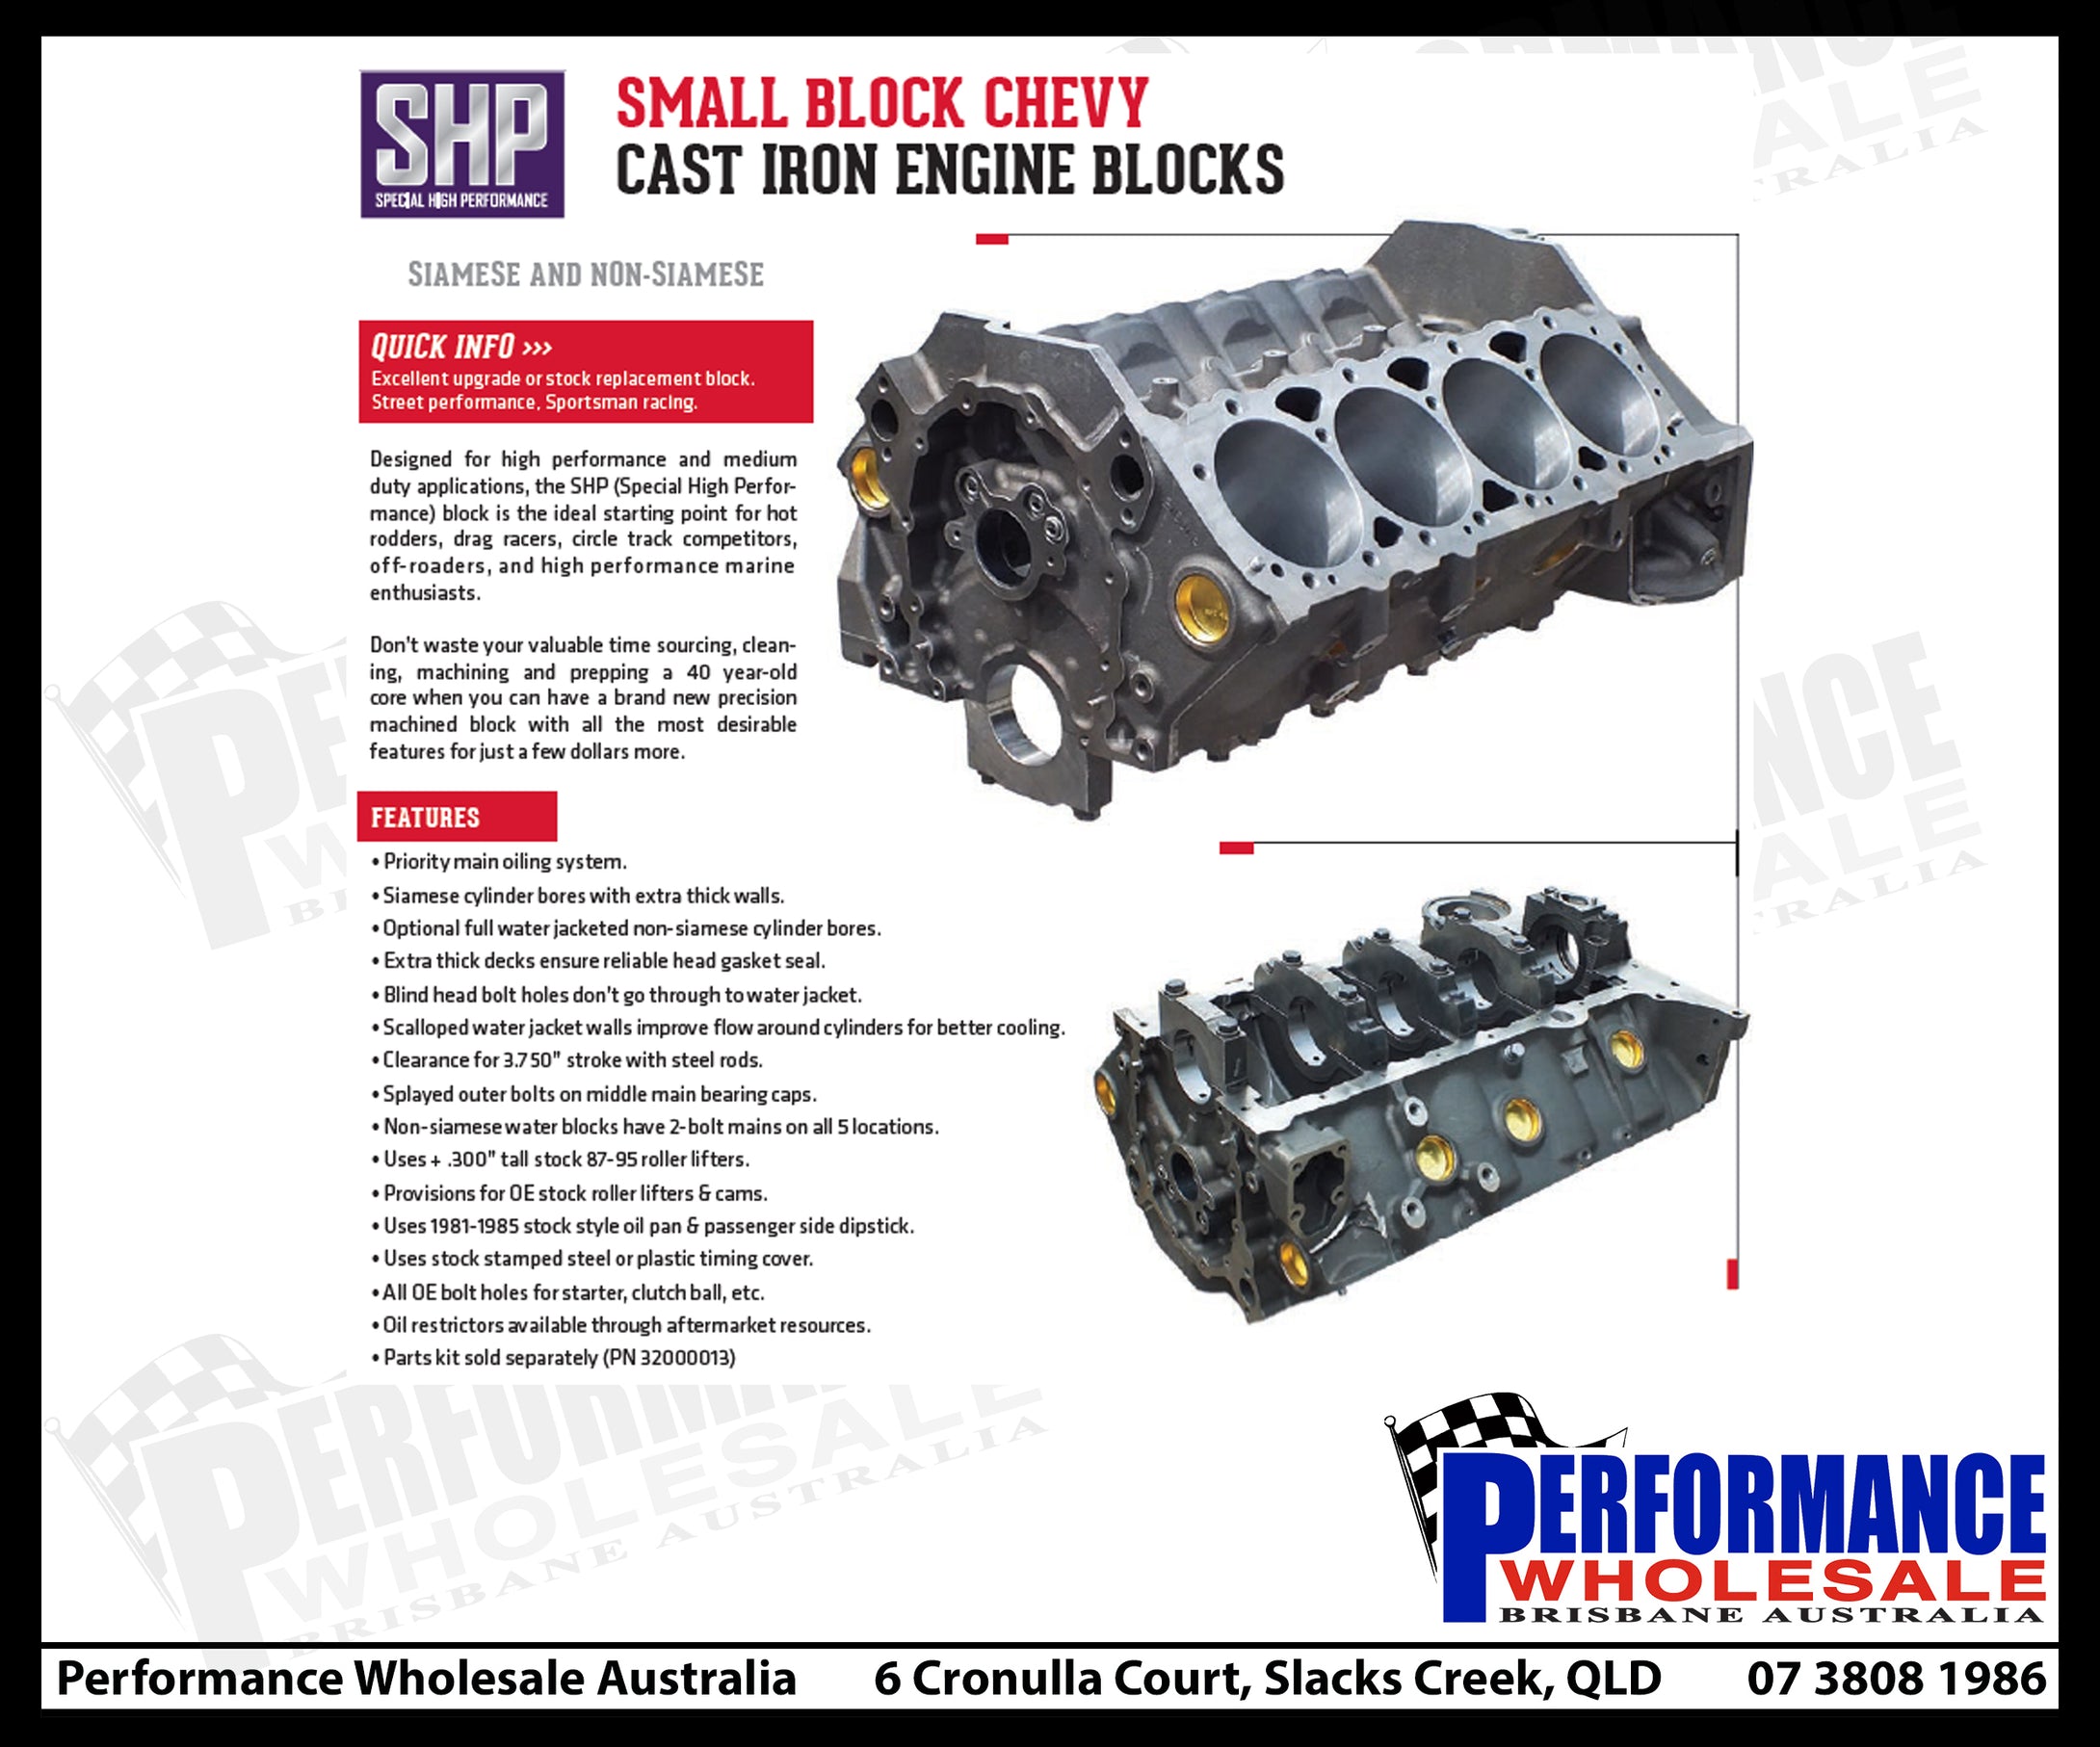 Dart SHP Chevrolet Small Block Iron Block – 4.000-4.125 In. Bore, 9.025 In. Deck